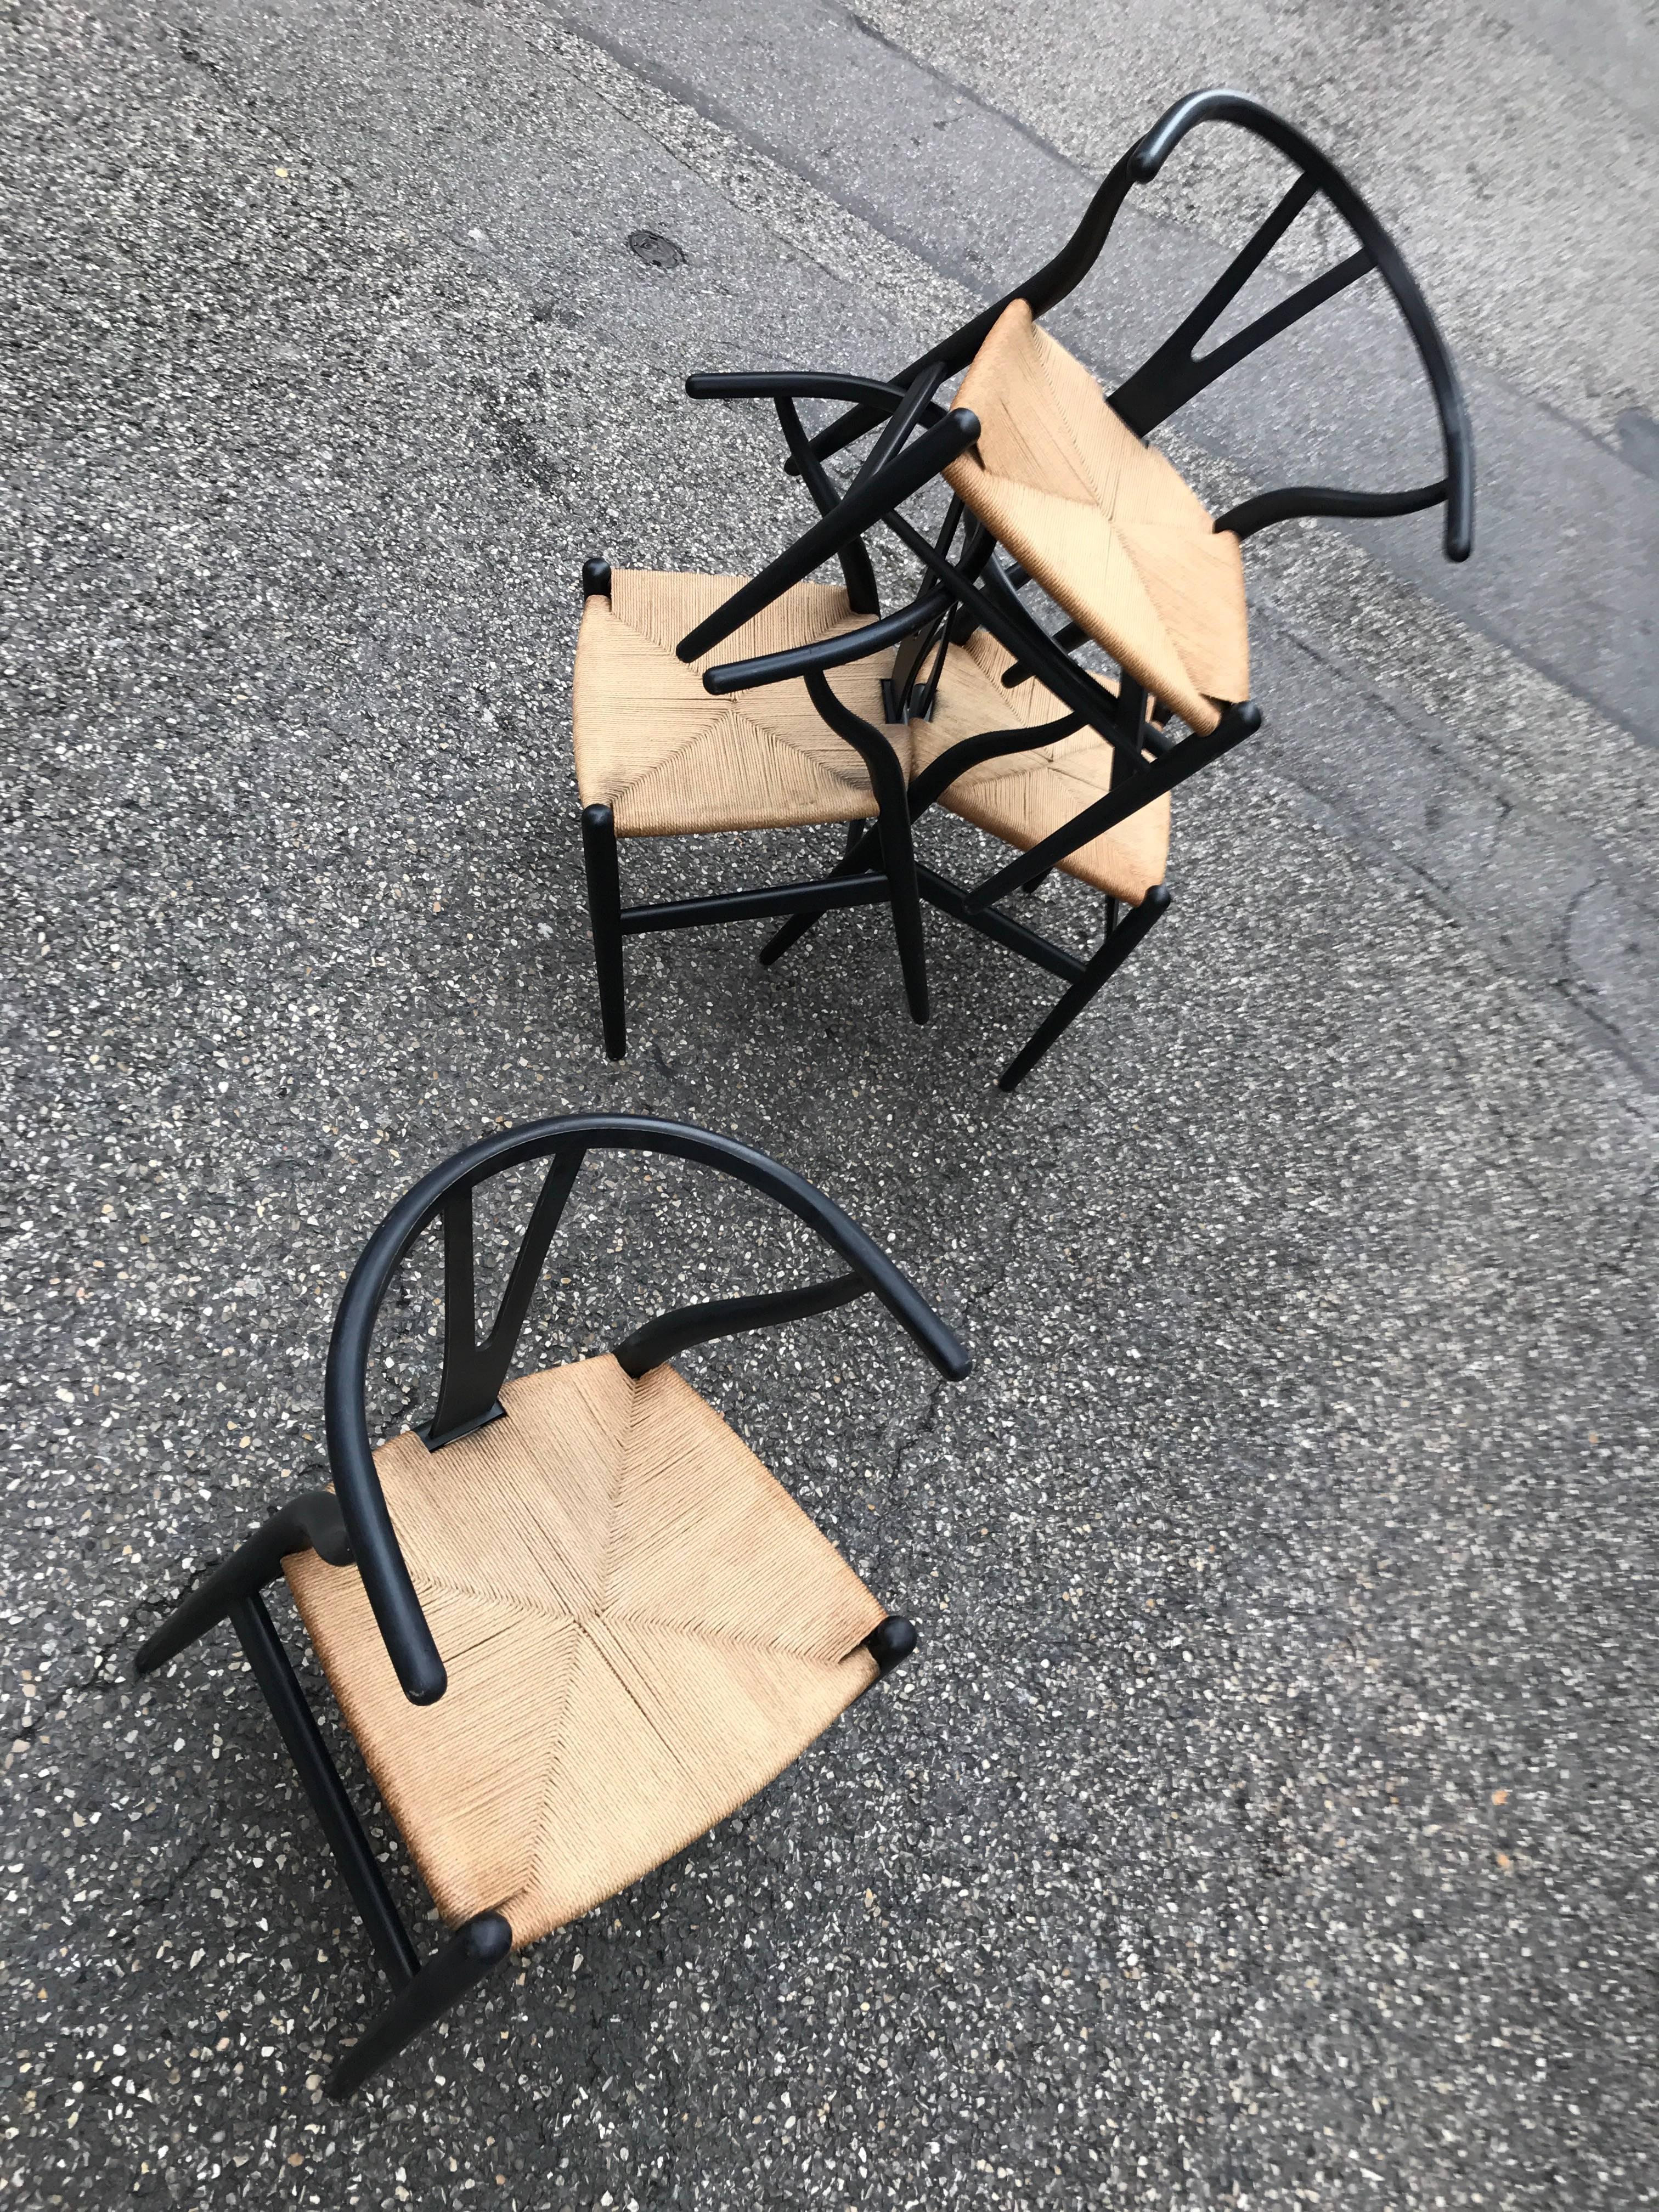 Mid-Century Modern Four Black Wishbone Chairs by Hans Wegner for Carl Hansen & Søn For Sale